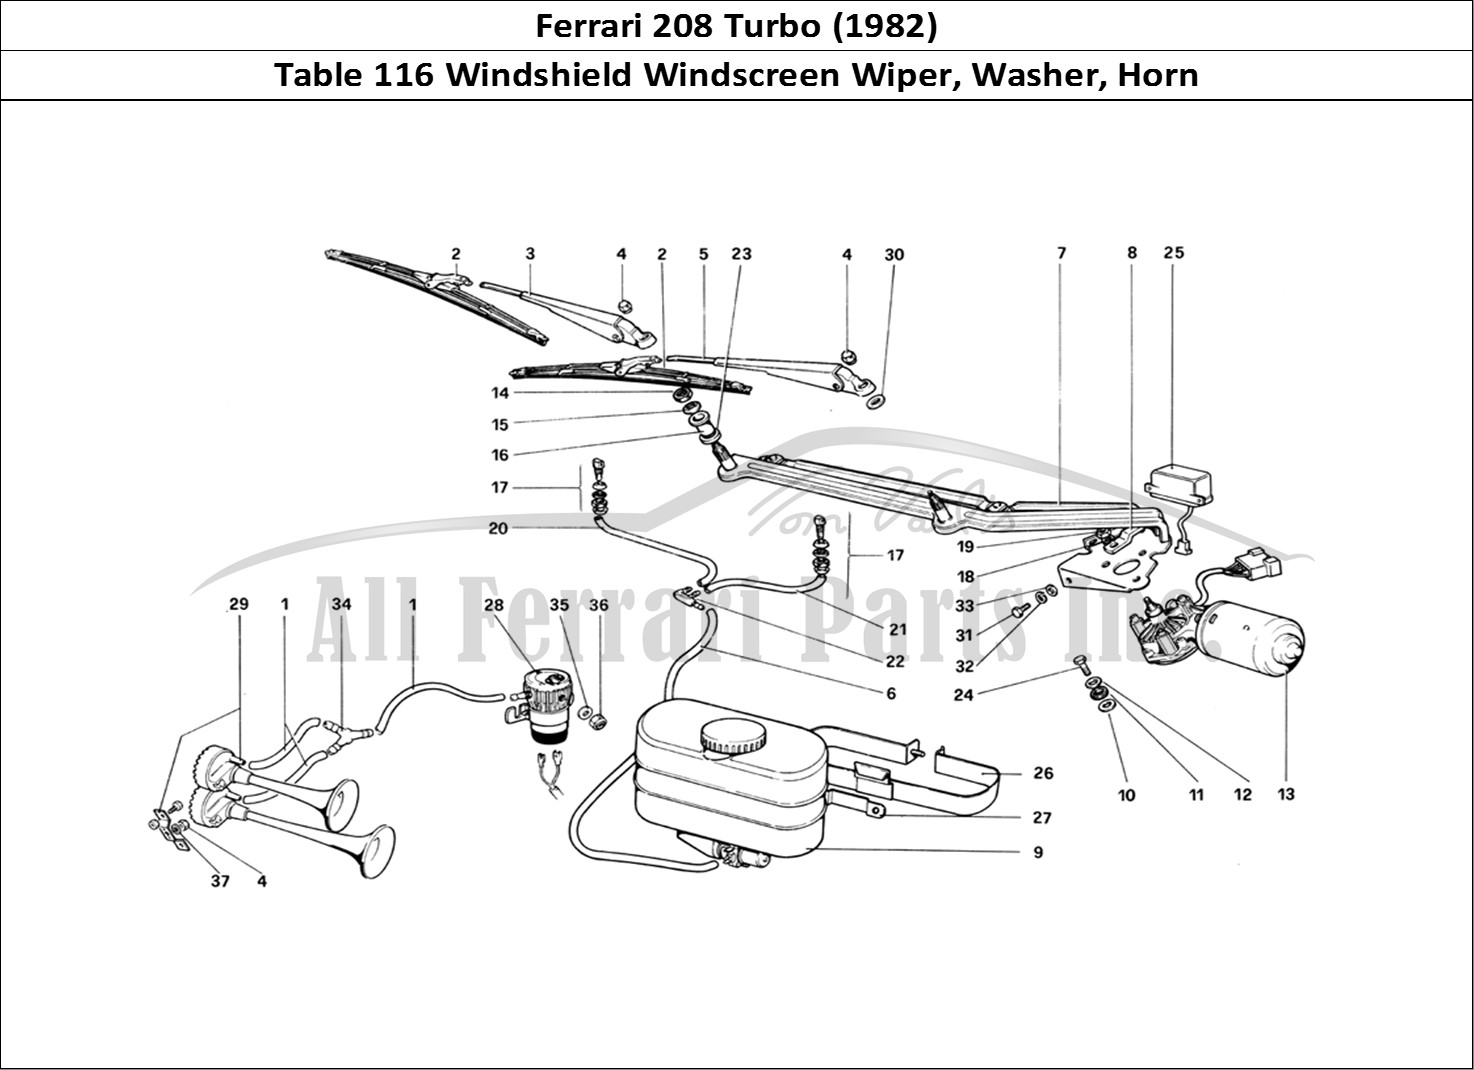 Ferrari Parts Ferrari 208 Turbo (1982) Page 116 Windshields Wiper, Washer